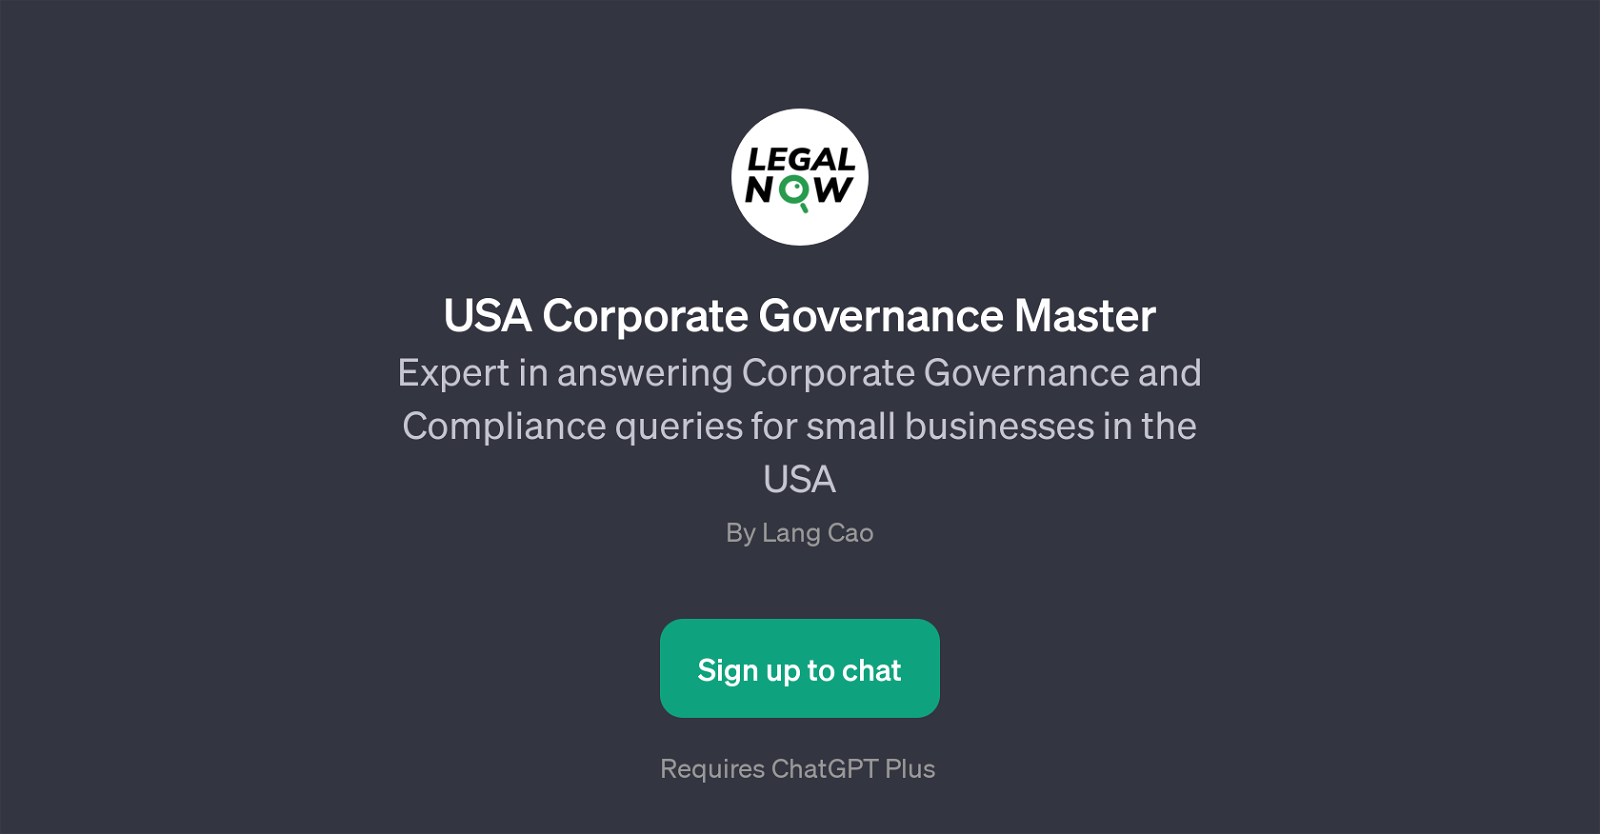 USA Corporate Governance Master website